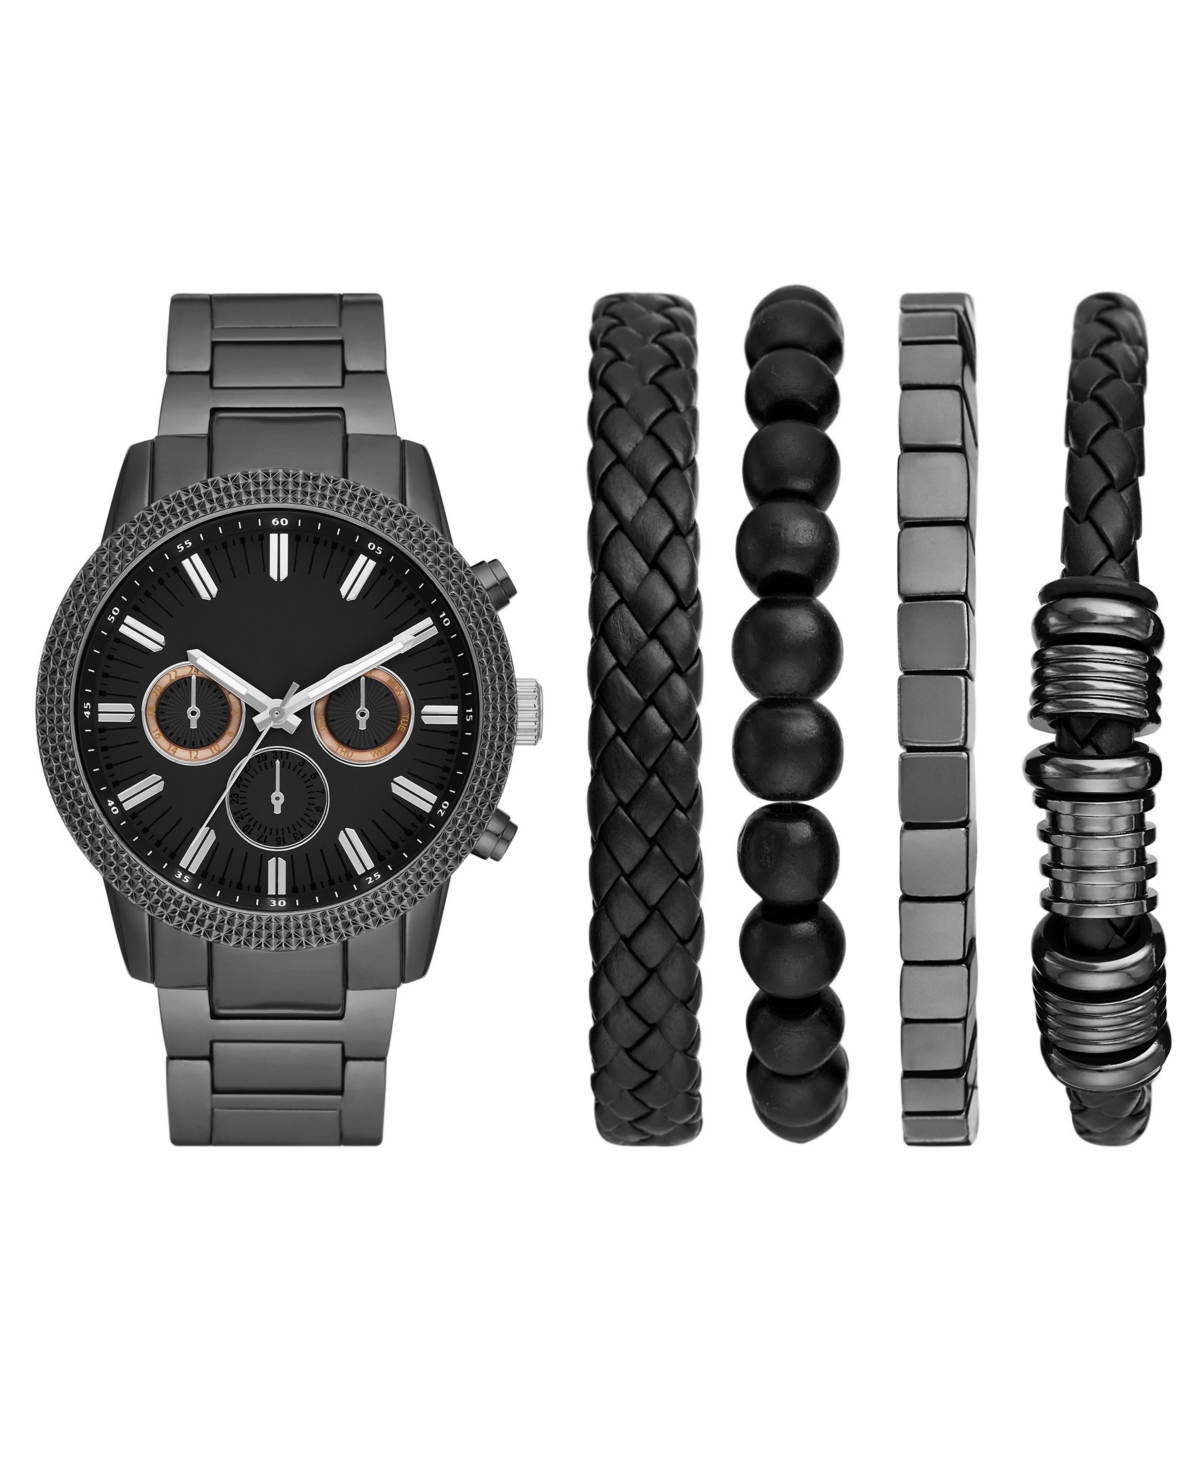 Folio Men's Black Stainless Steel Bracelet Watch, 46mm Gift Set